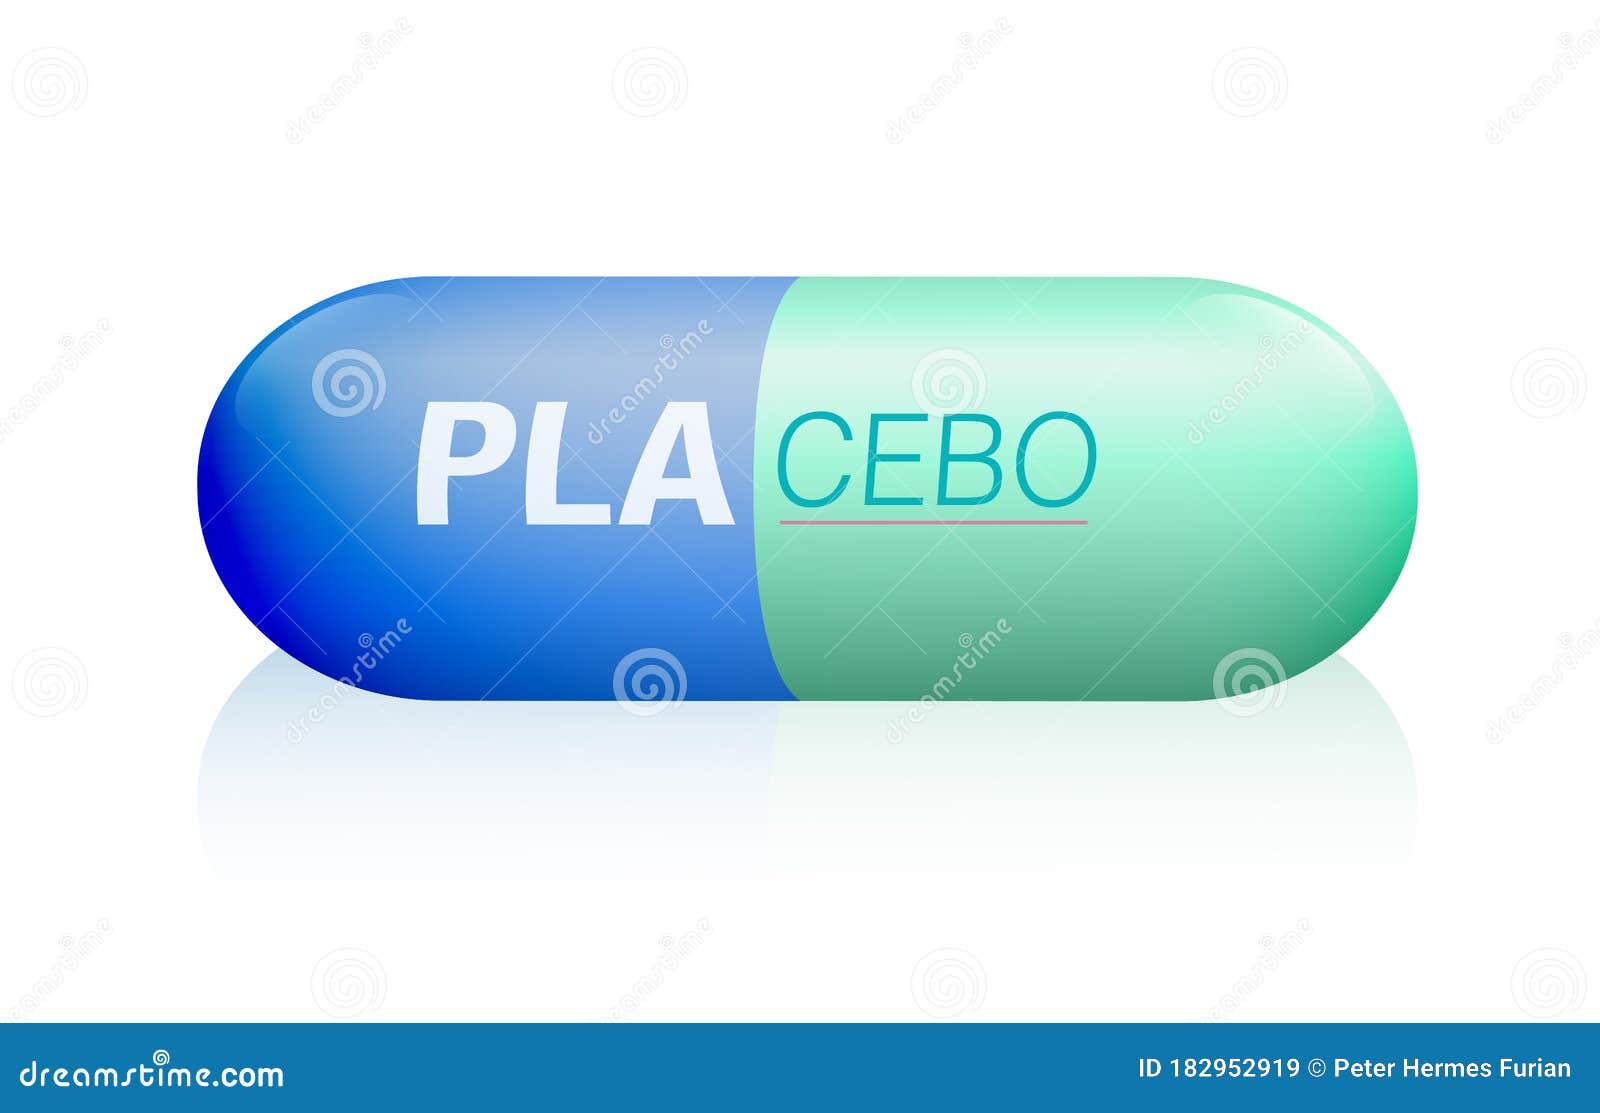 placebo pill capsule fake medicine